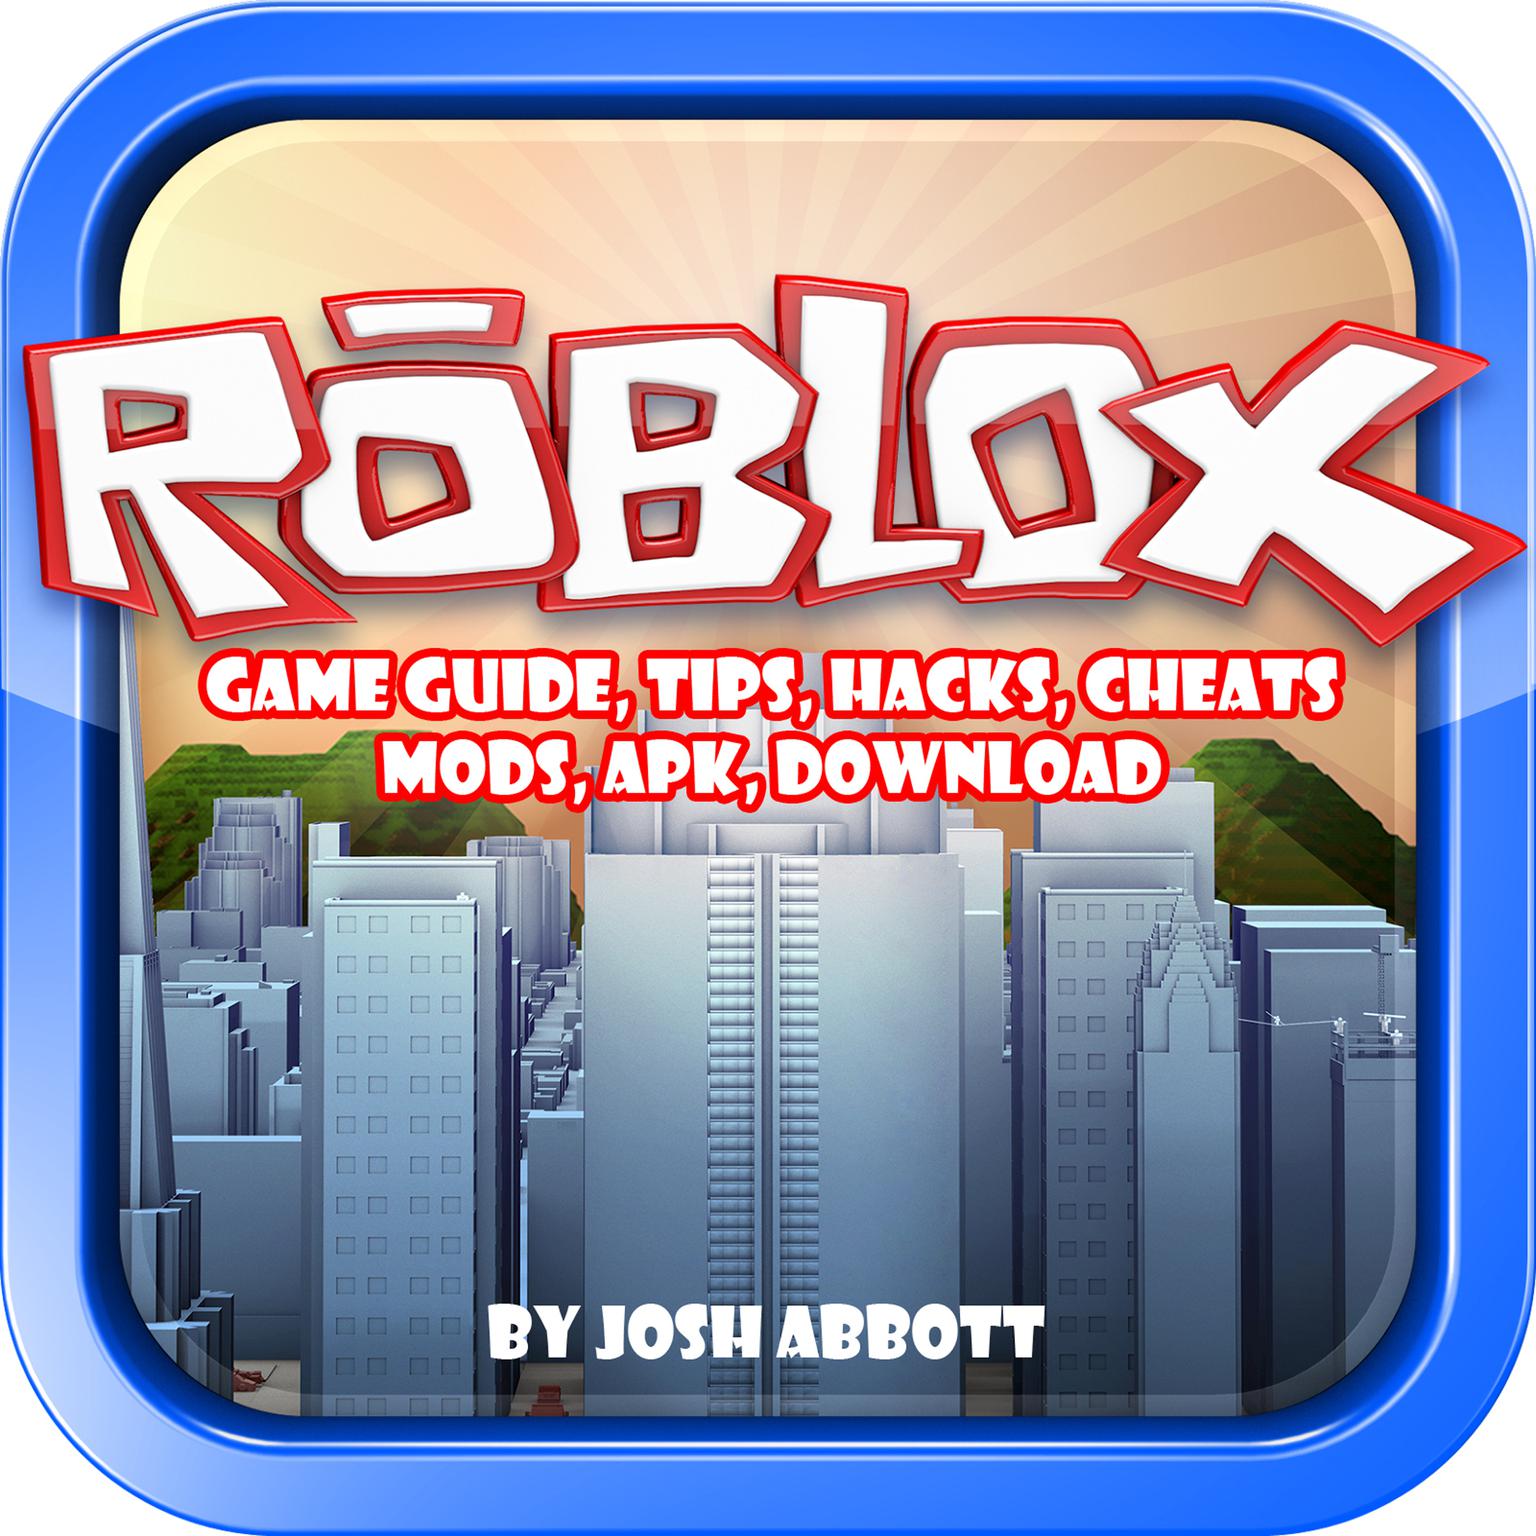 Roblox Game Guide, Tips, Hacks, Cheats, Mods, Apk, Download Audiobook, by Josh Abbott